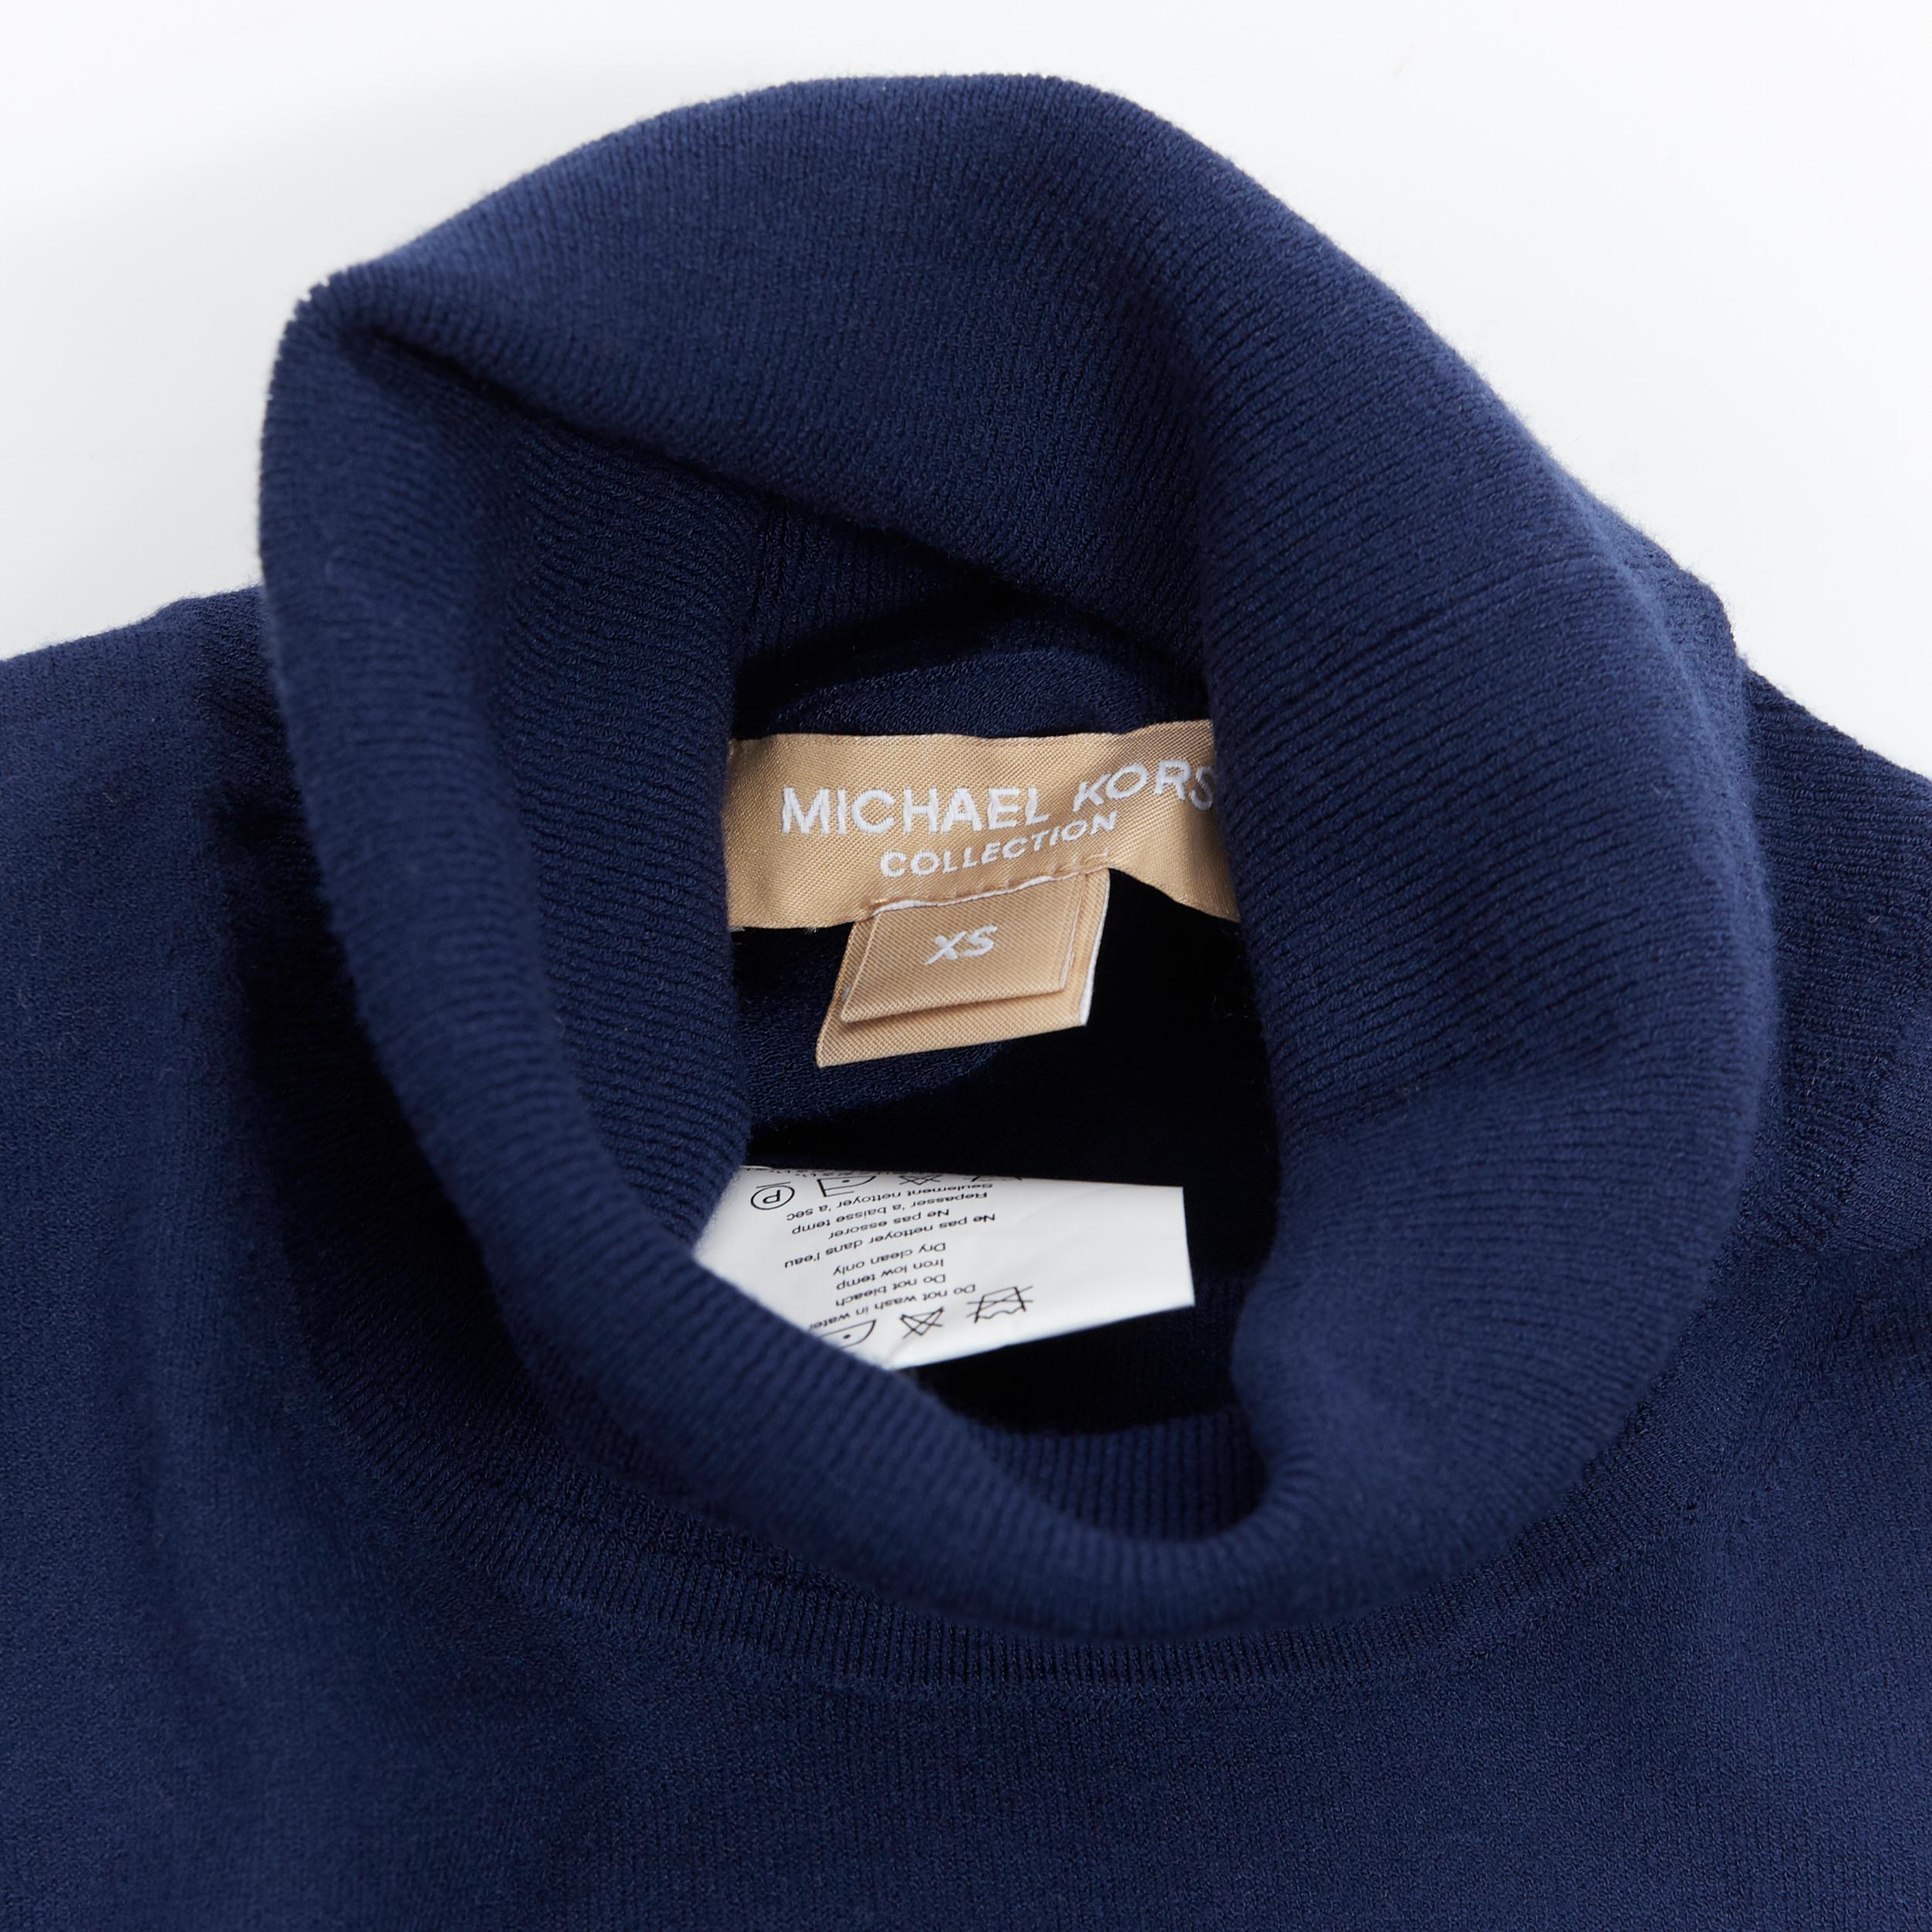 MICHAEL KORS COLLECTION navy blue minimalist short fit turtleneck sweater top XS 1